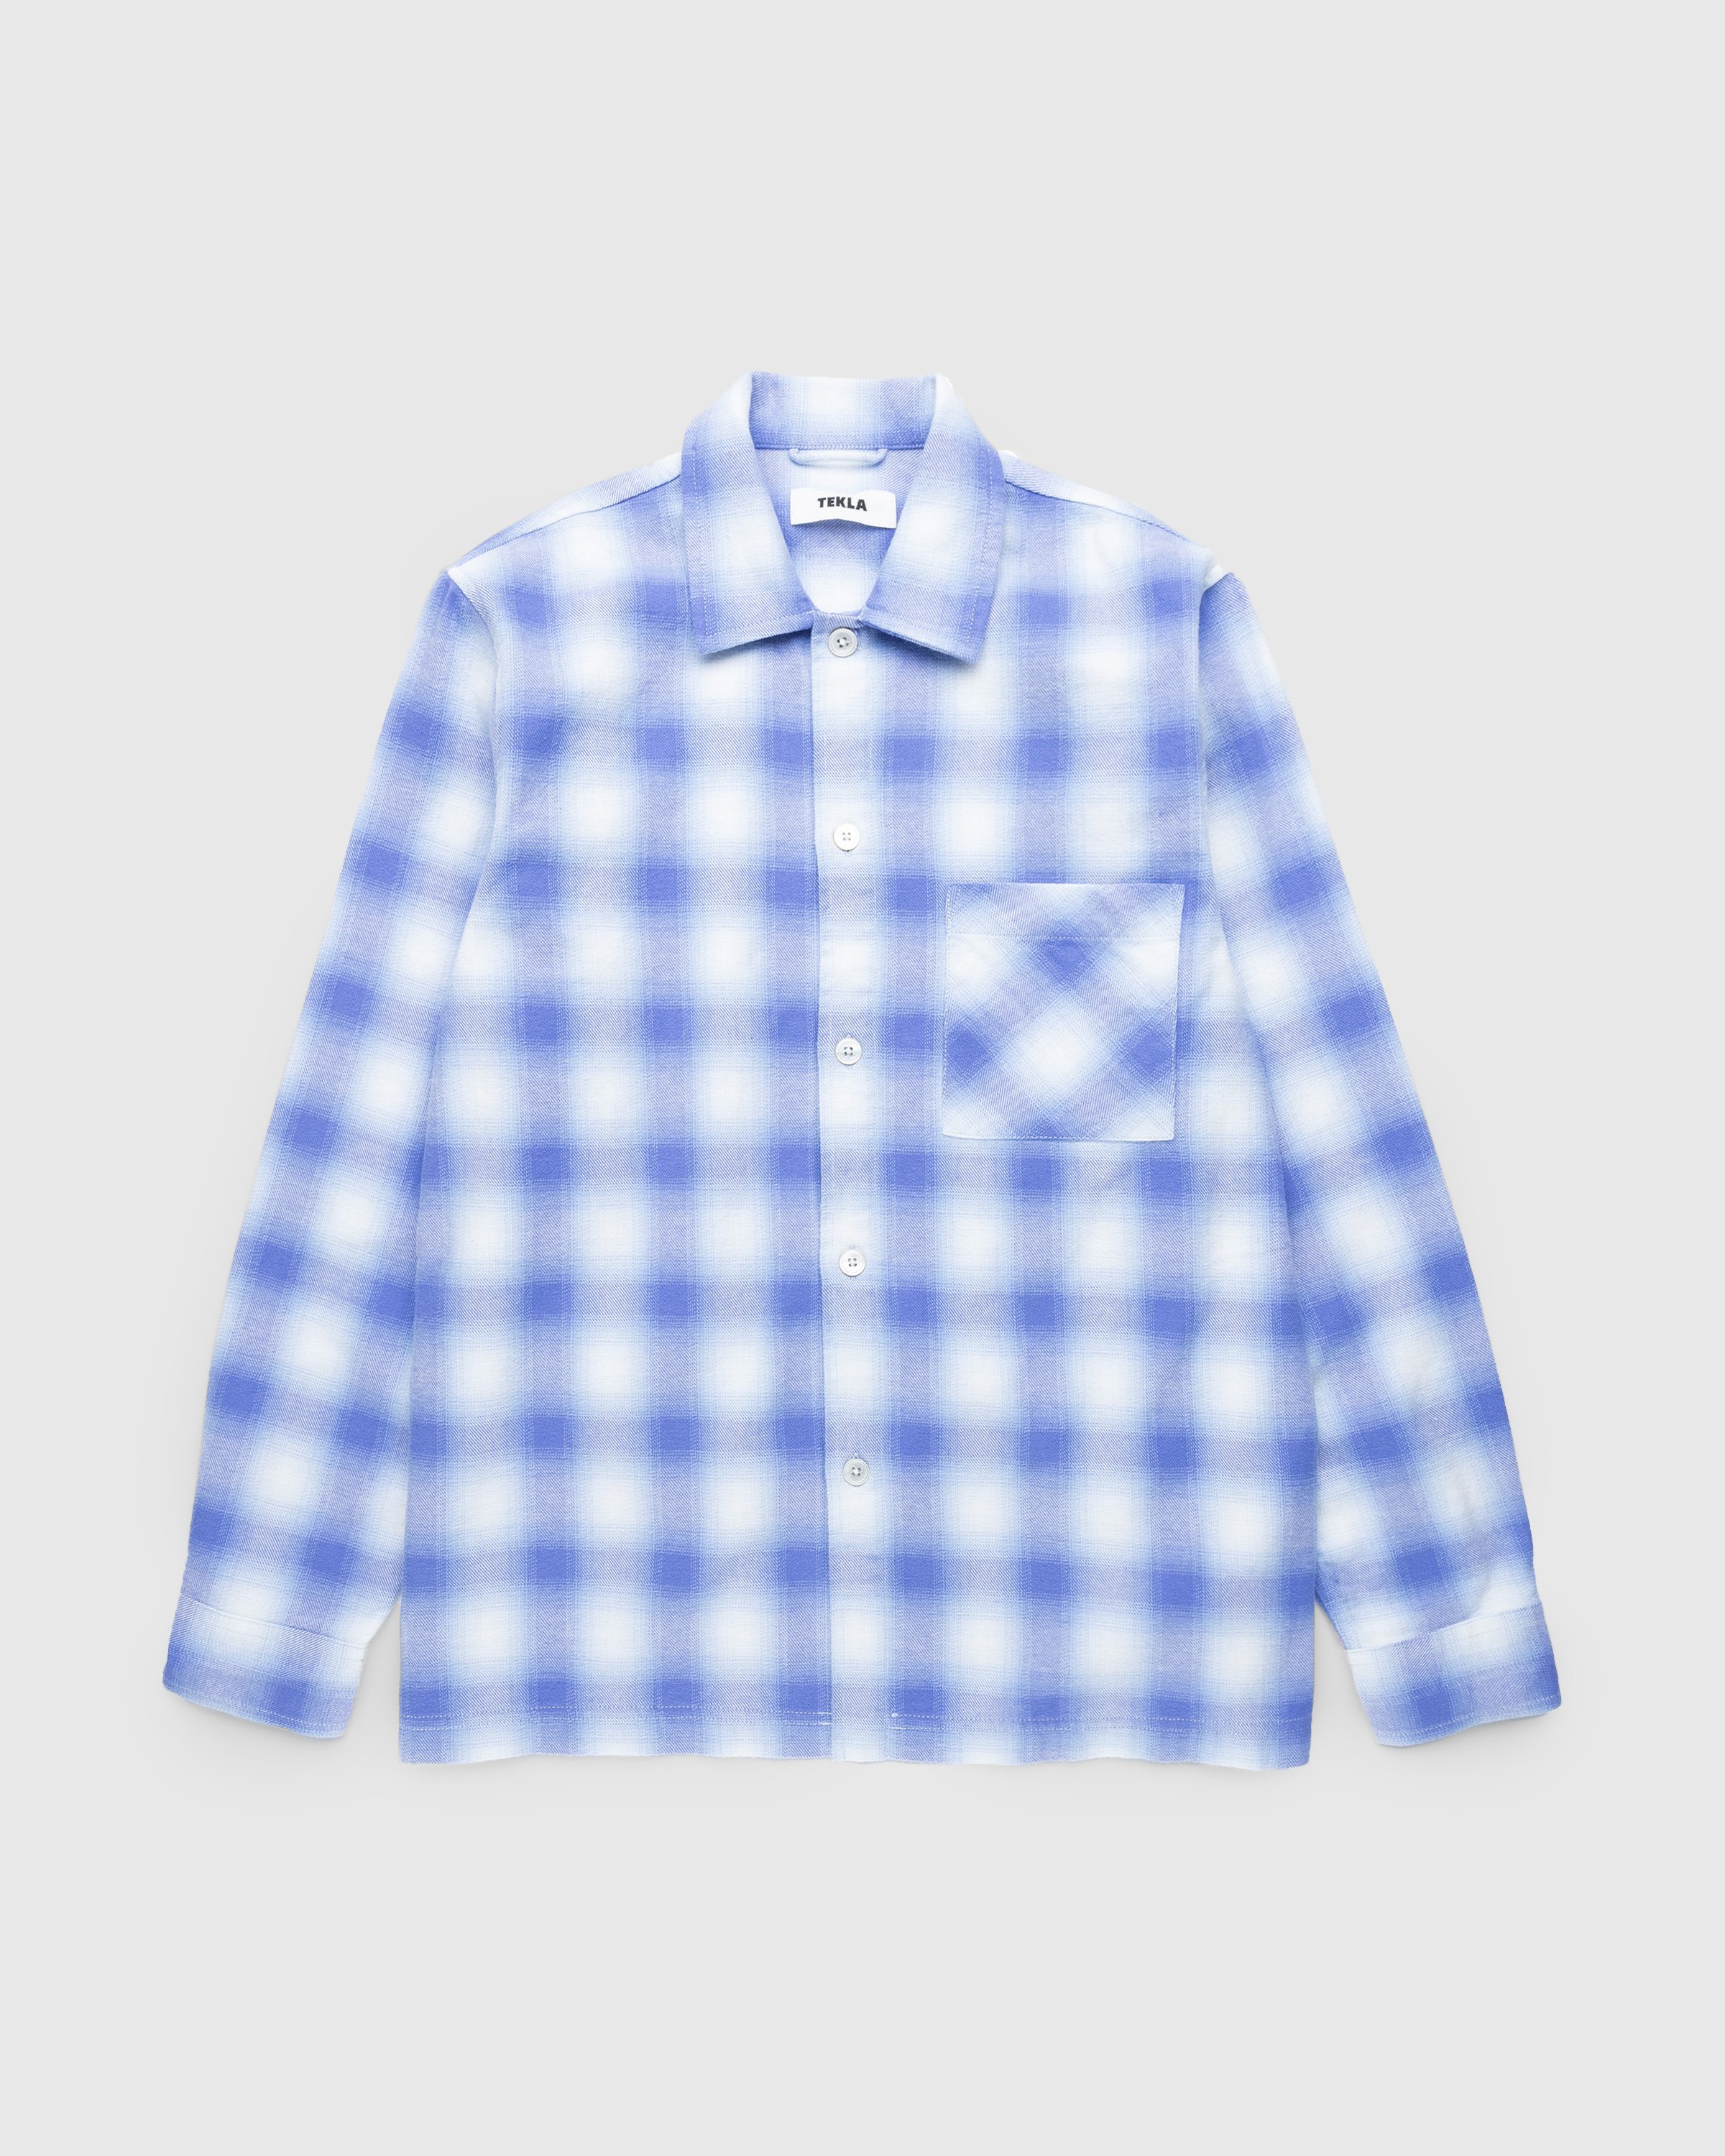 Tekla - Flannel Pyjamas Shirt Light Blue Plaid - Clothing - Blue - Image 1